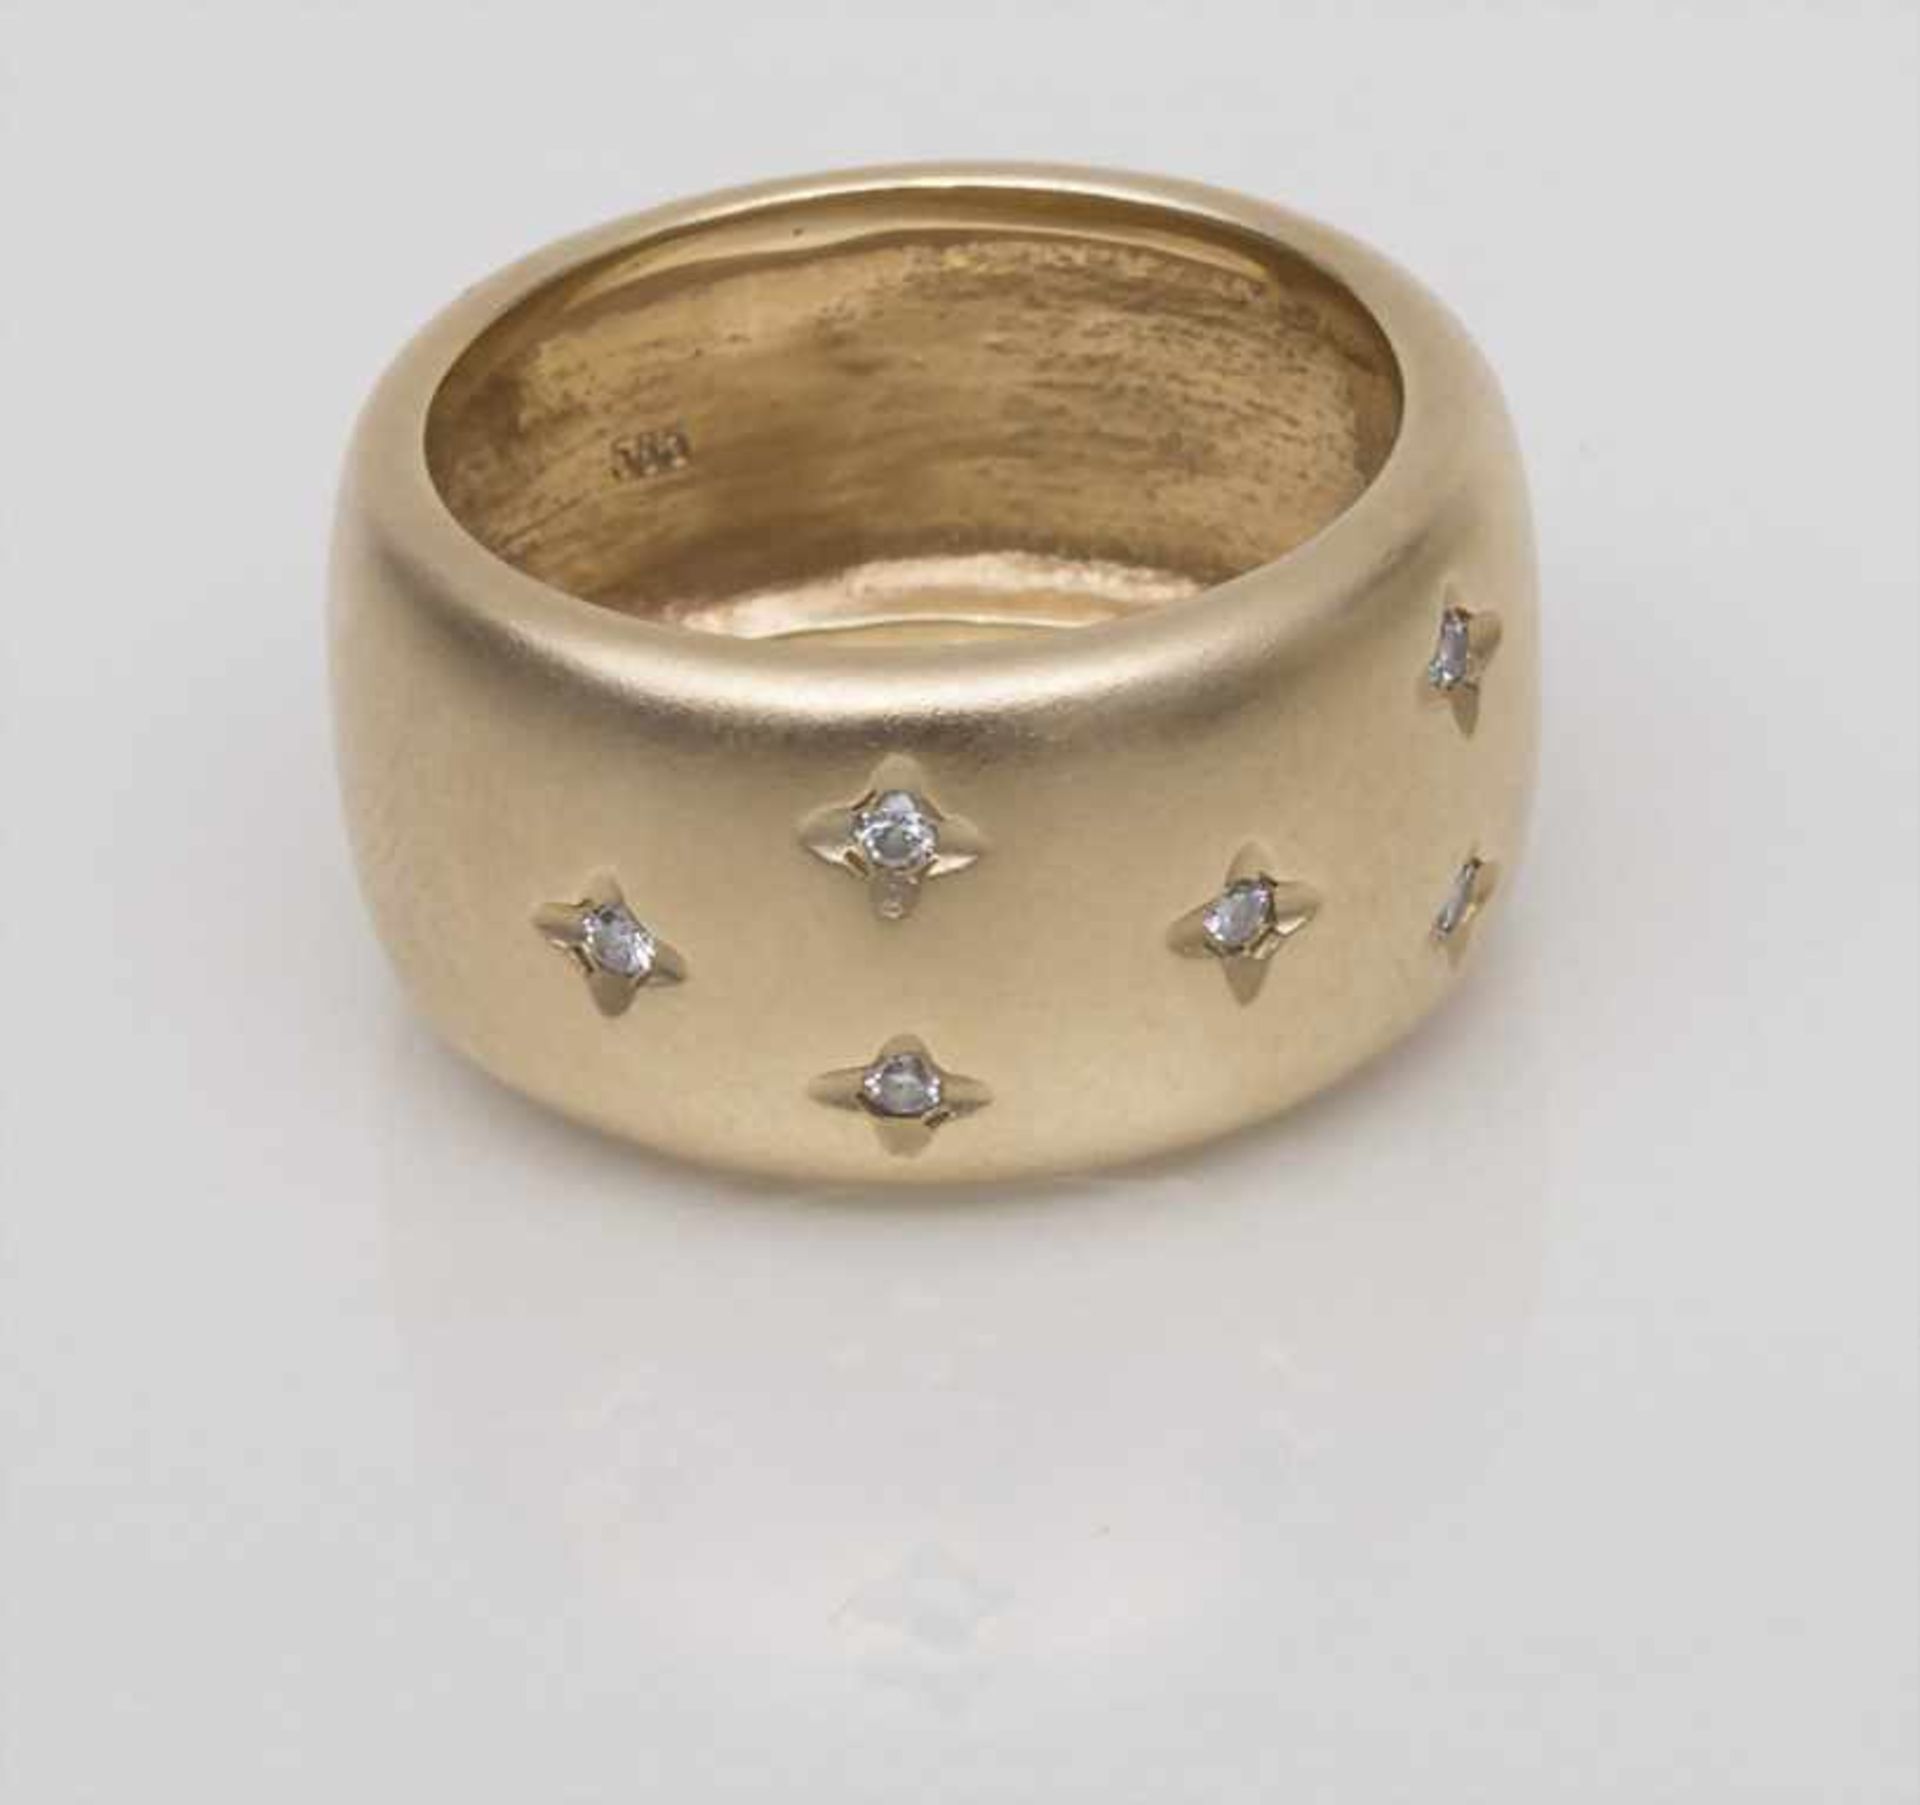 Damen-Bandring / A ladies ring Material: Gelbgold 585/000 14 Kt, 7 Diamantsplitter,Ringgröße: 56,